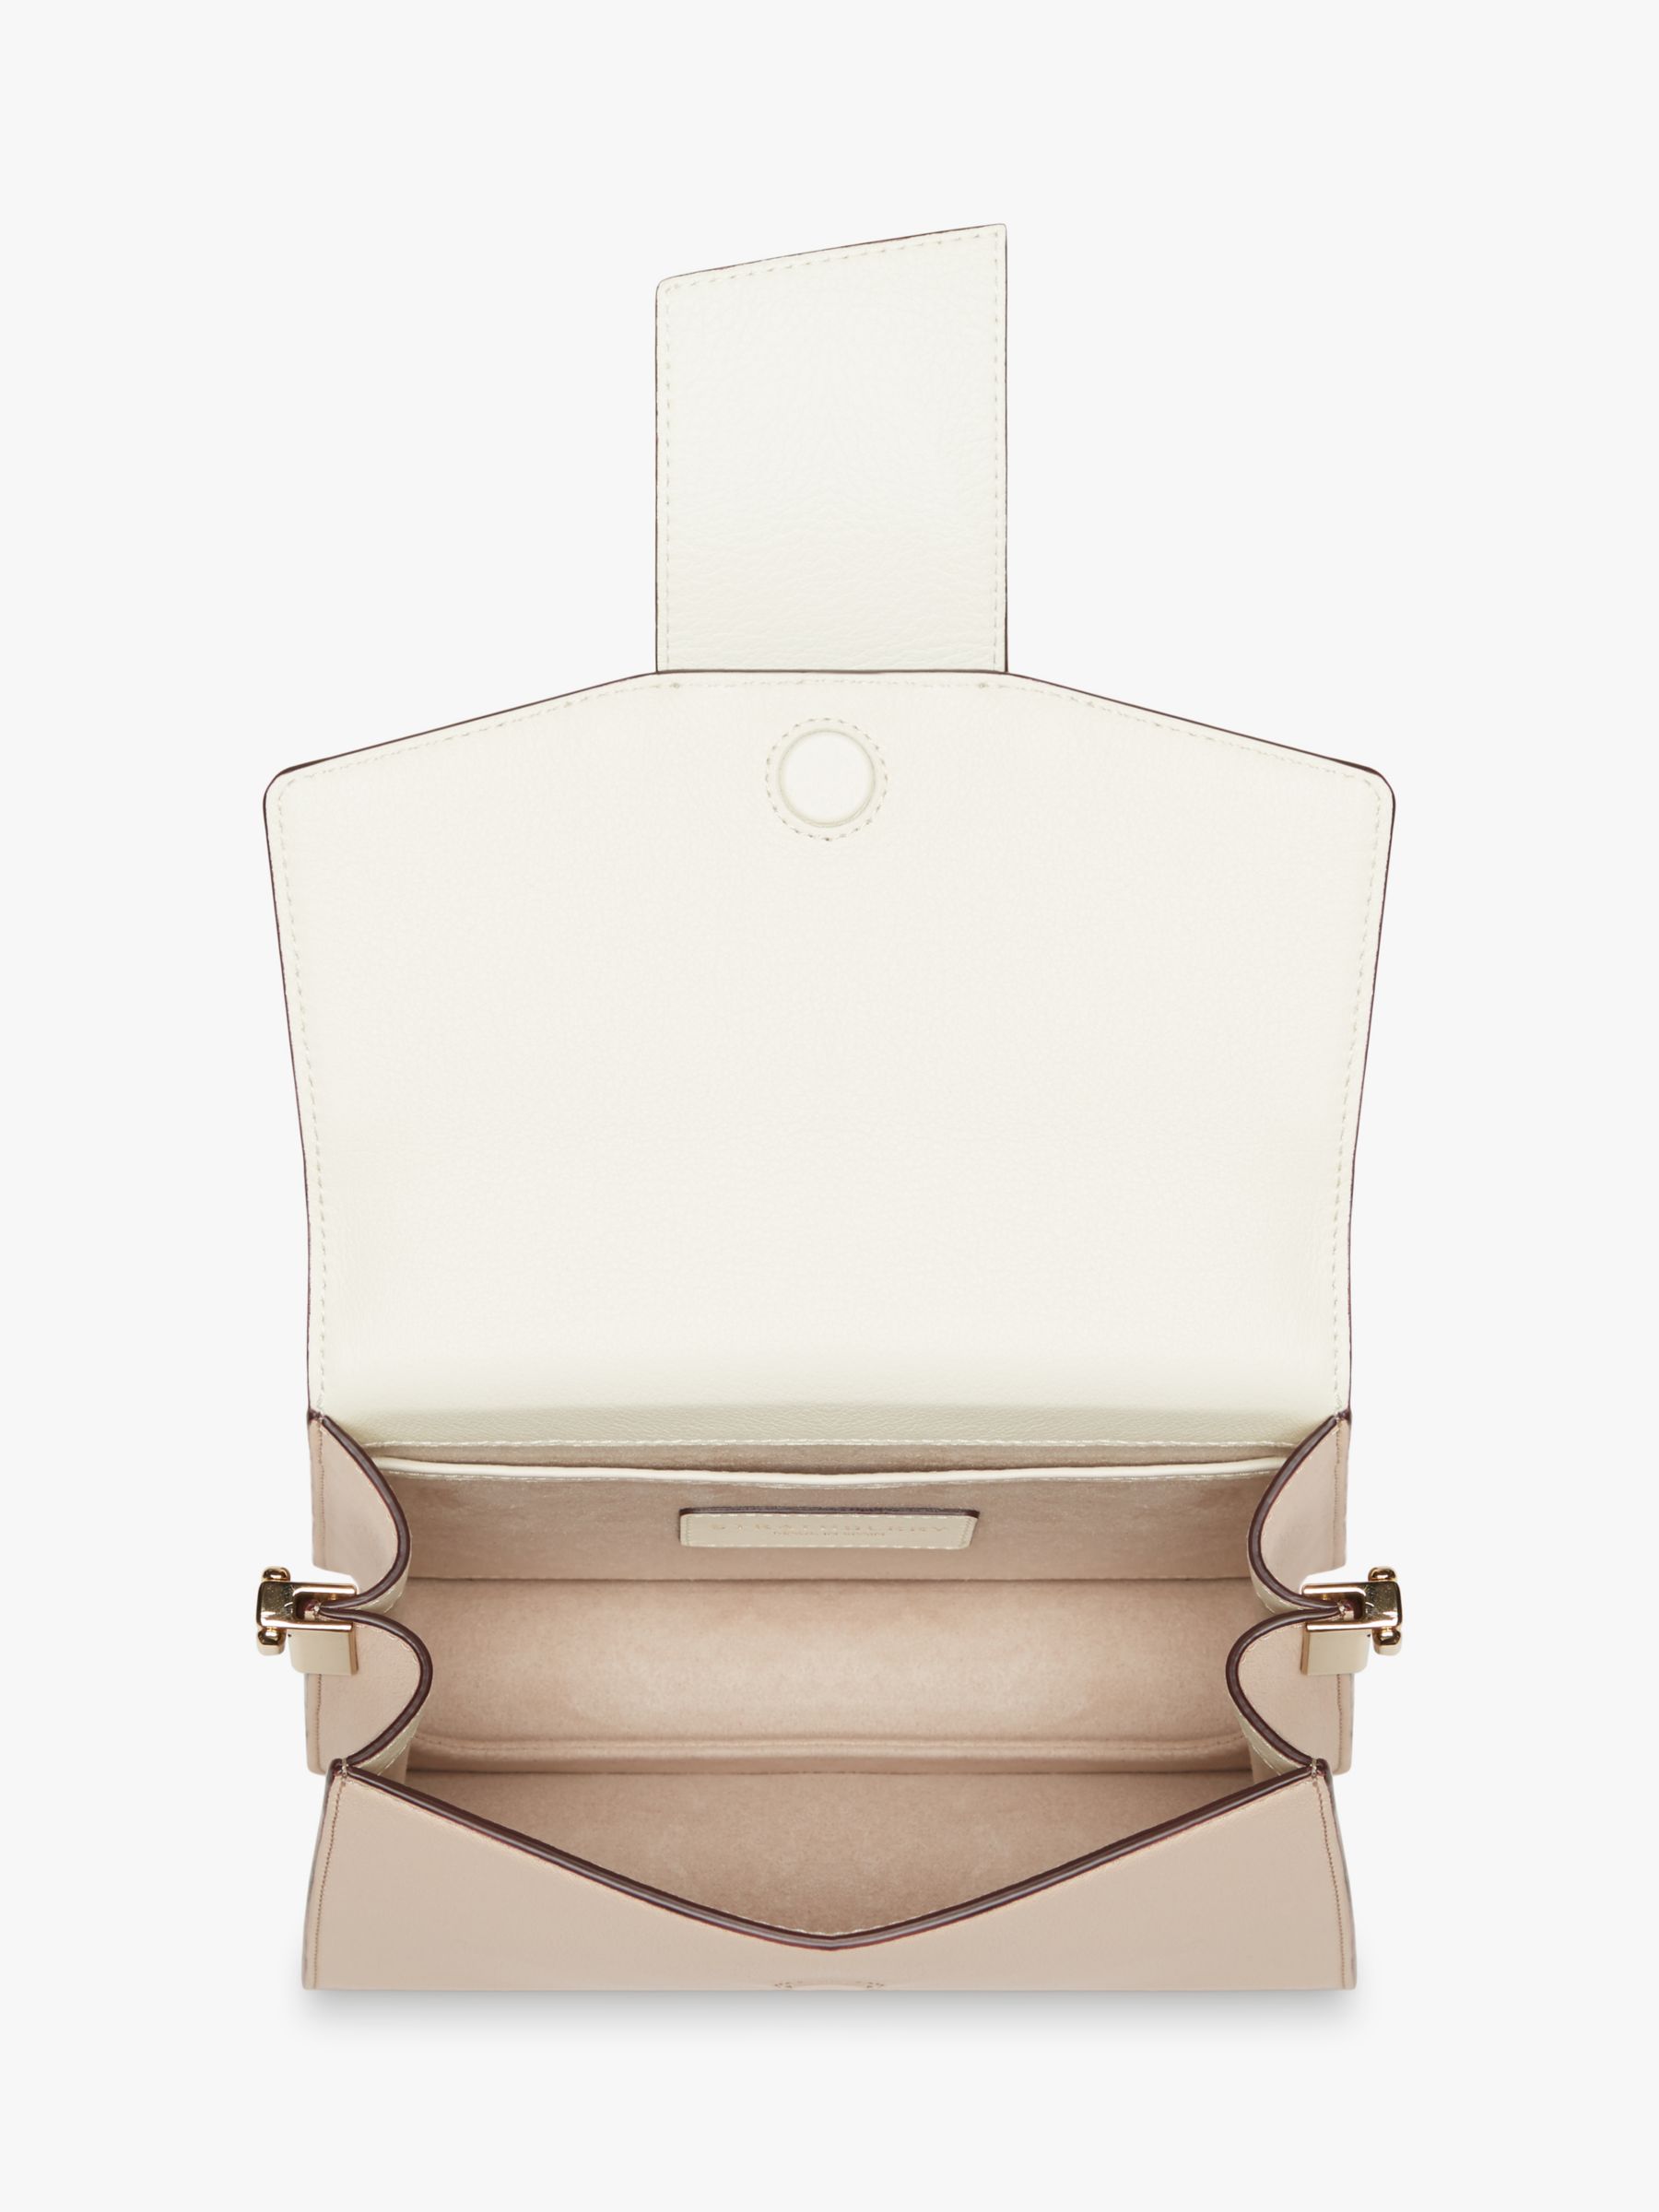 Strathberry Box Crescent Bicolor Leather Shoulder Bag Vanilla Diamond